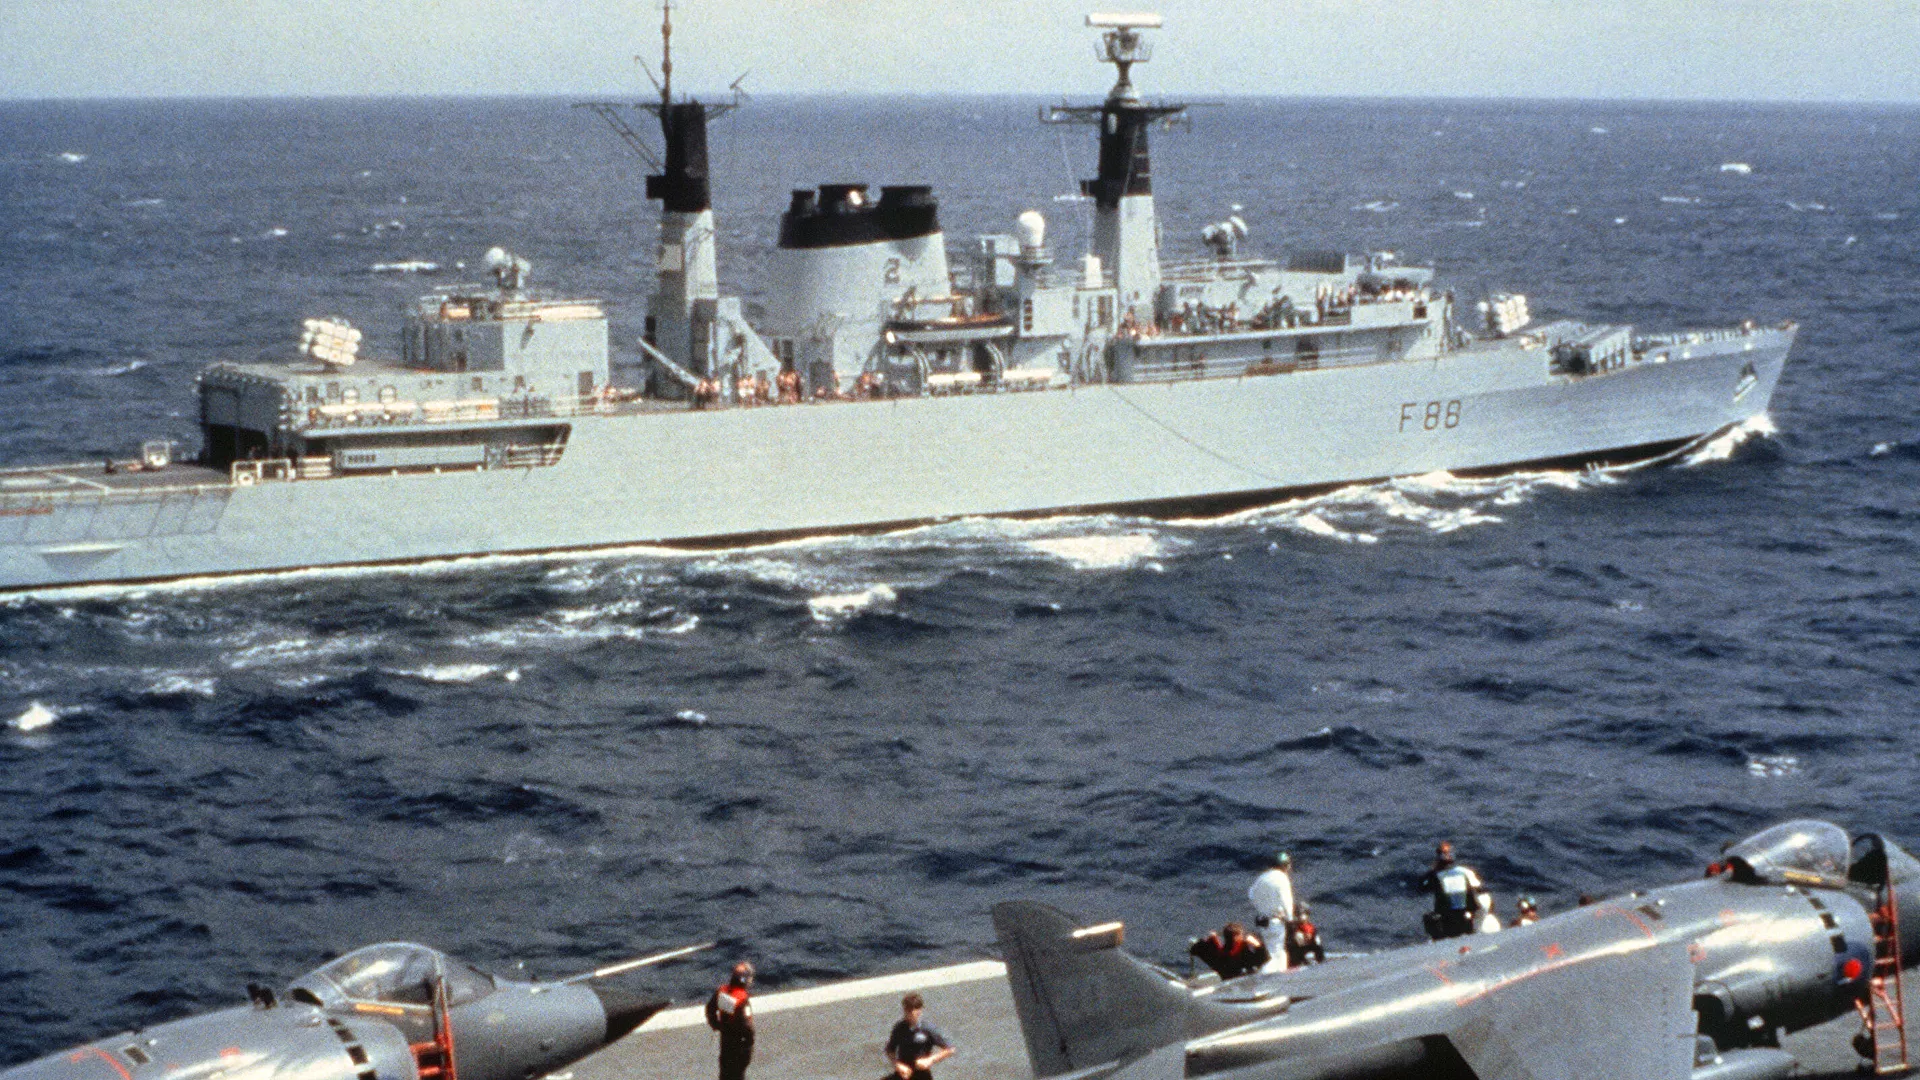  Un documento revela que Reino Unido movilizó 31 armas nucleares en guerra de Malvinas